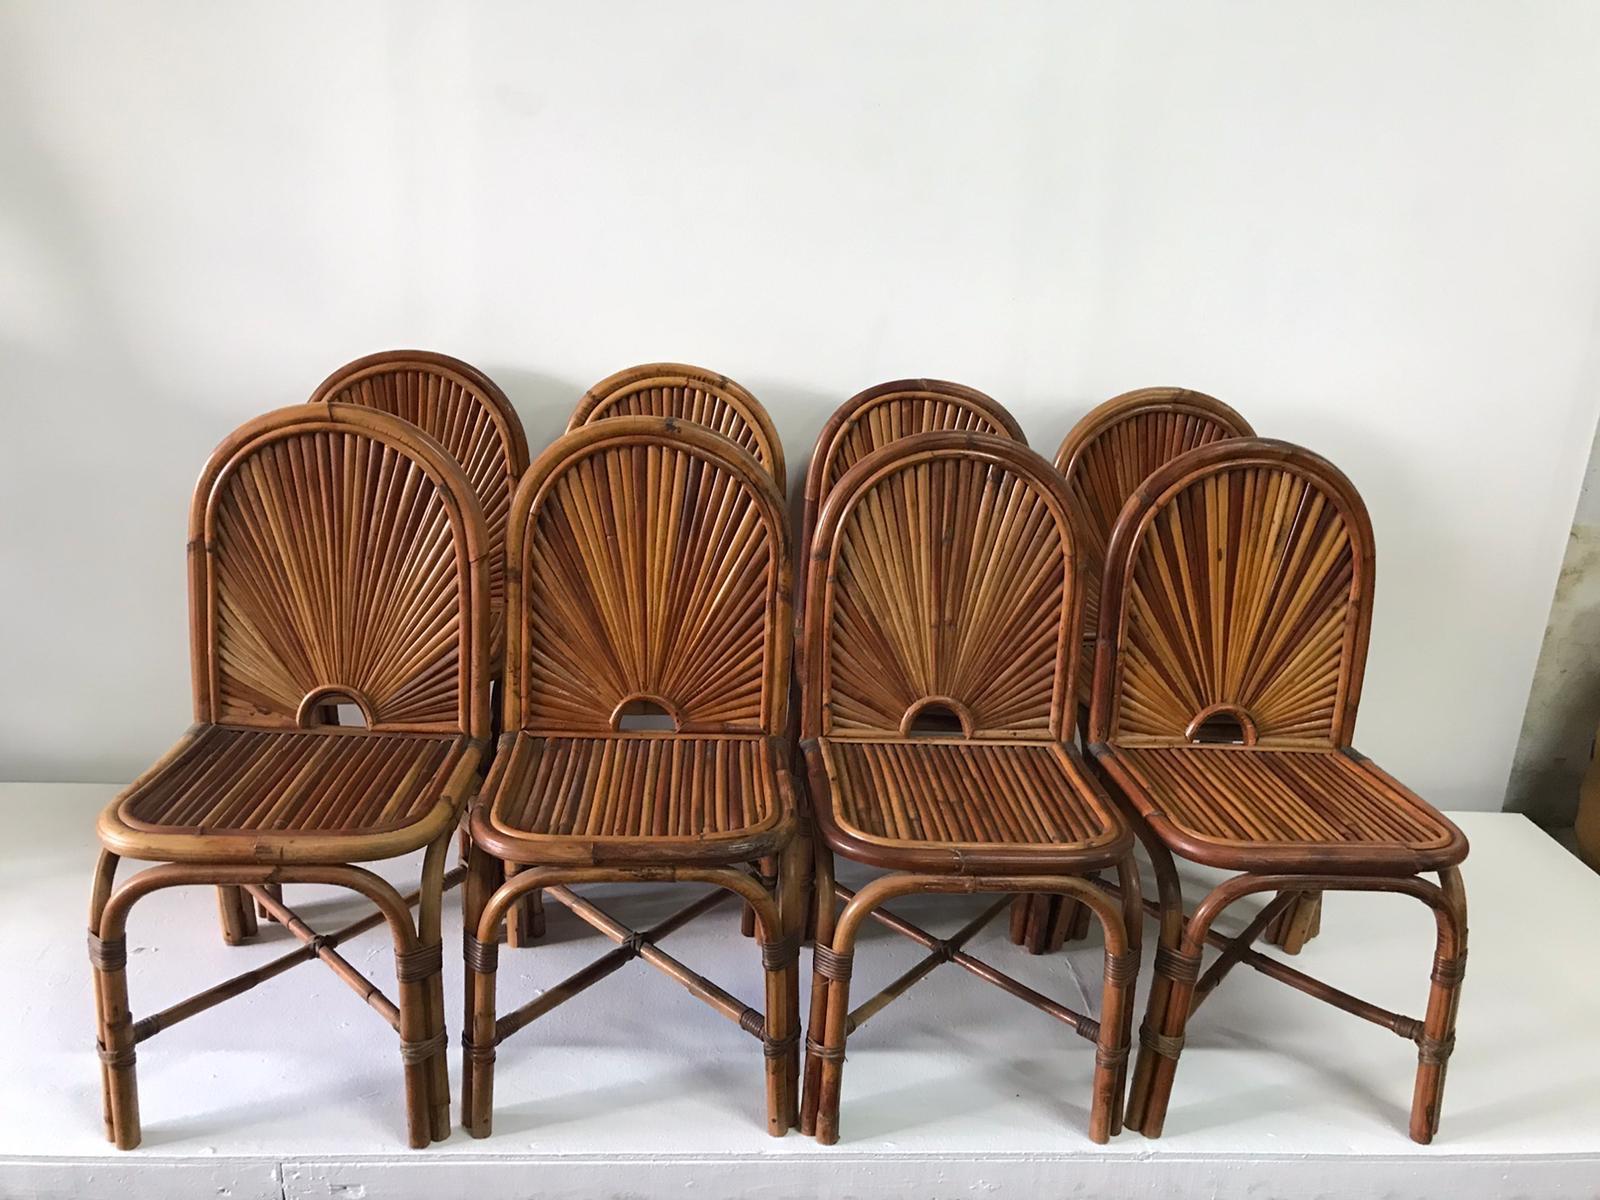 Gabriella Crespi Rising Sun Collection Rattan Chairs, Set of 8 1